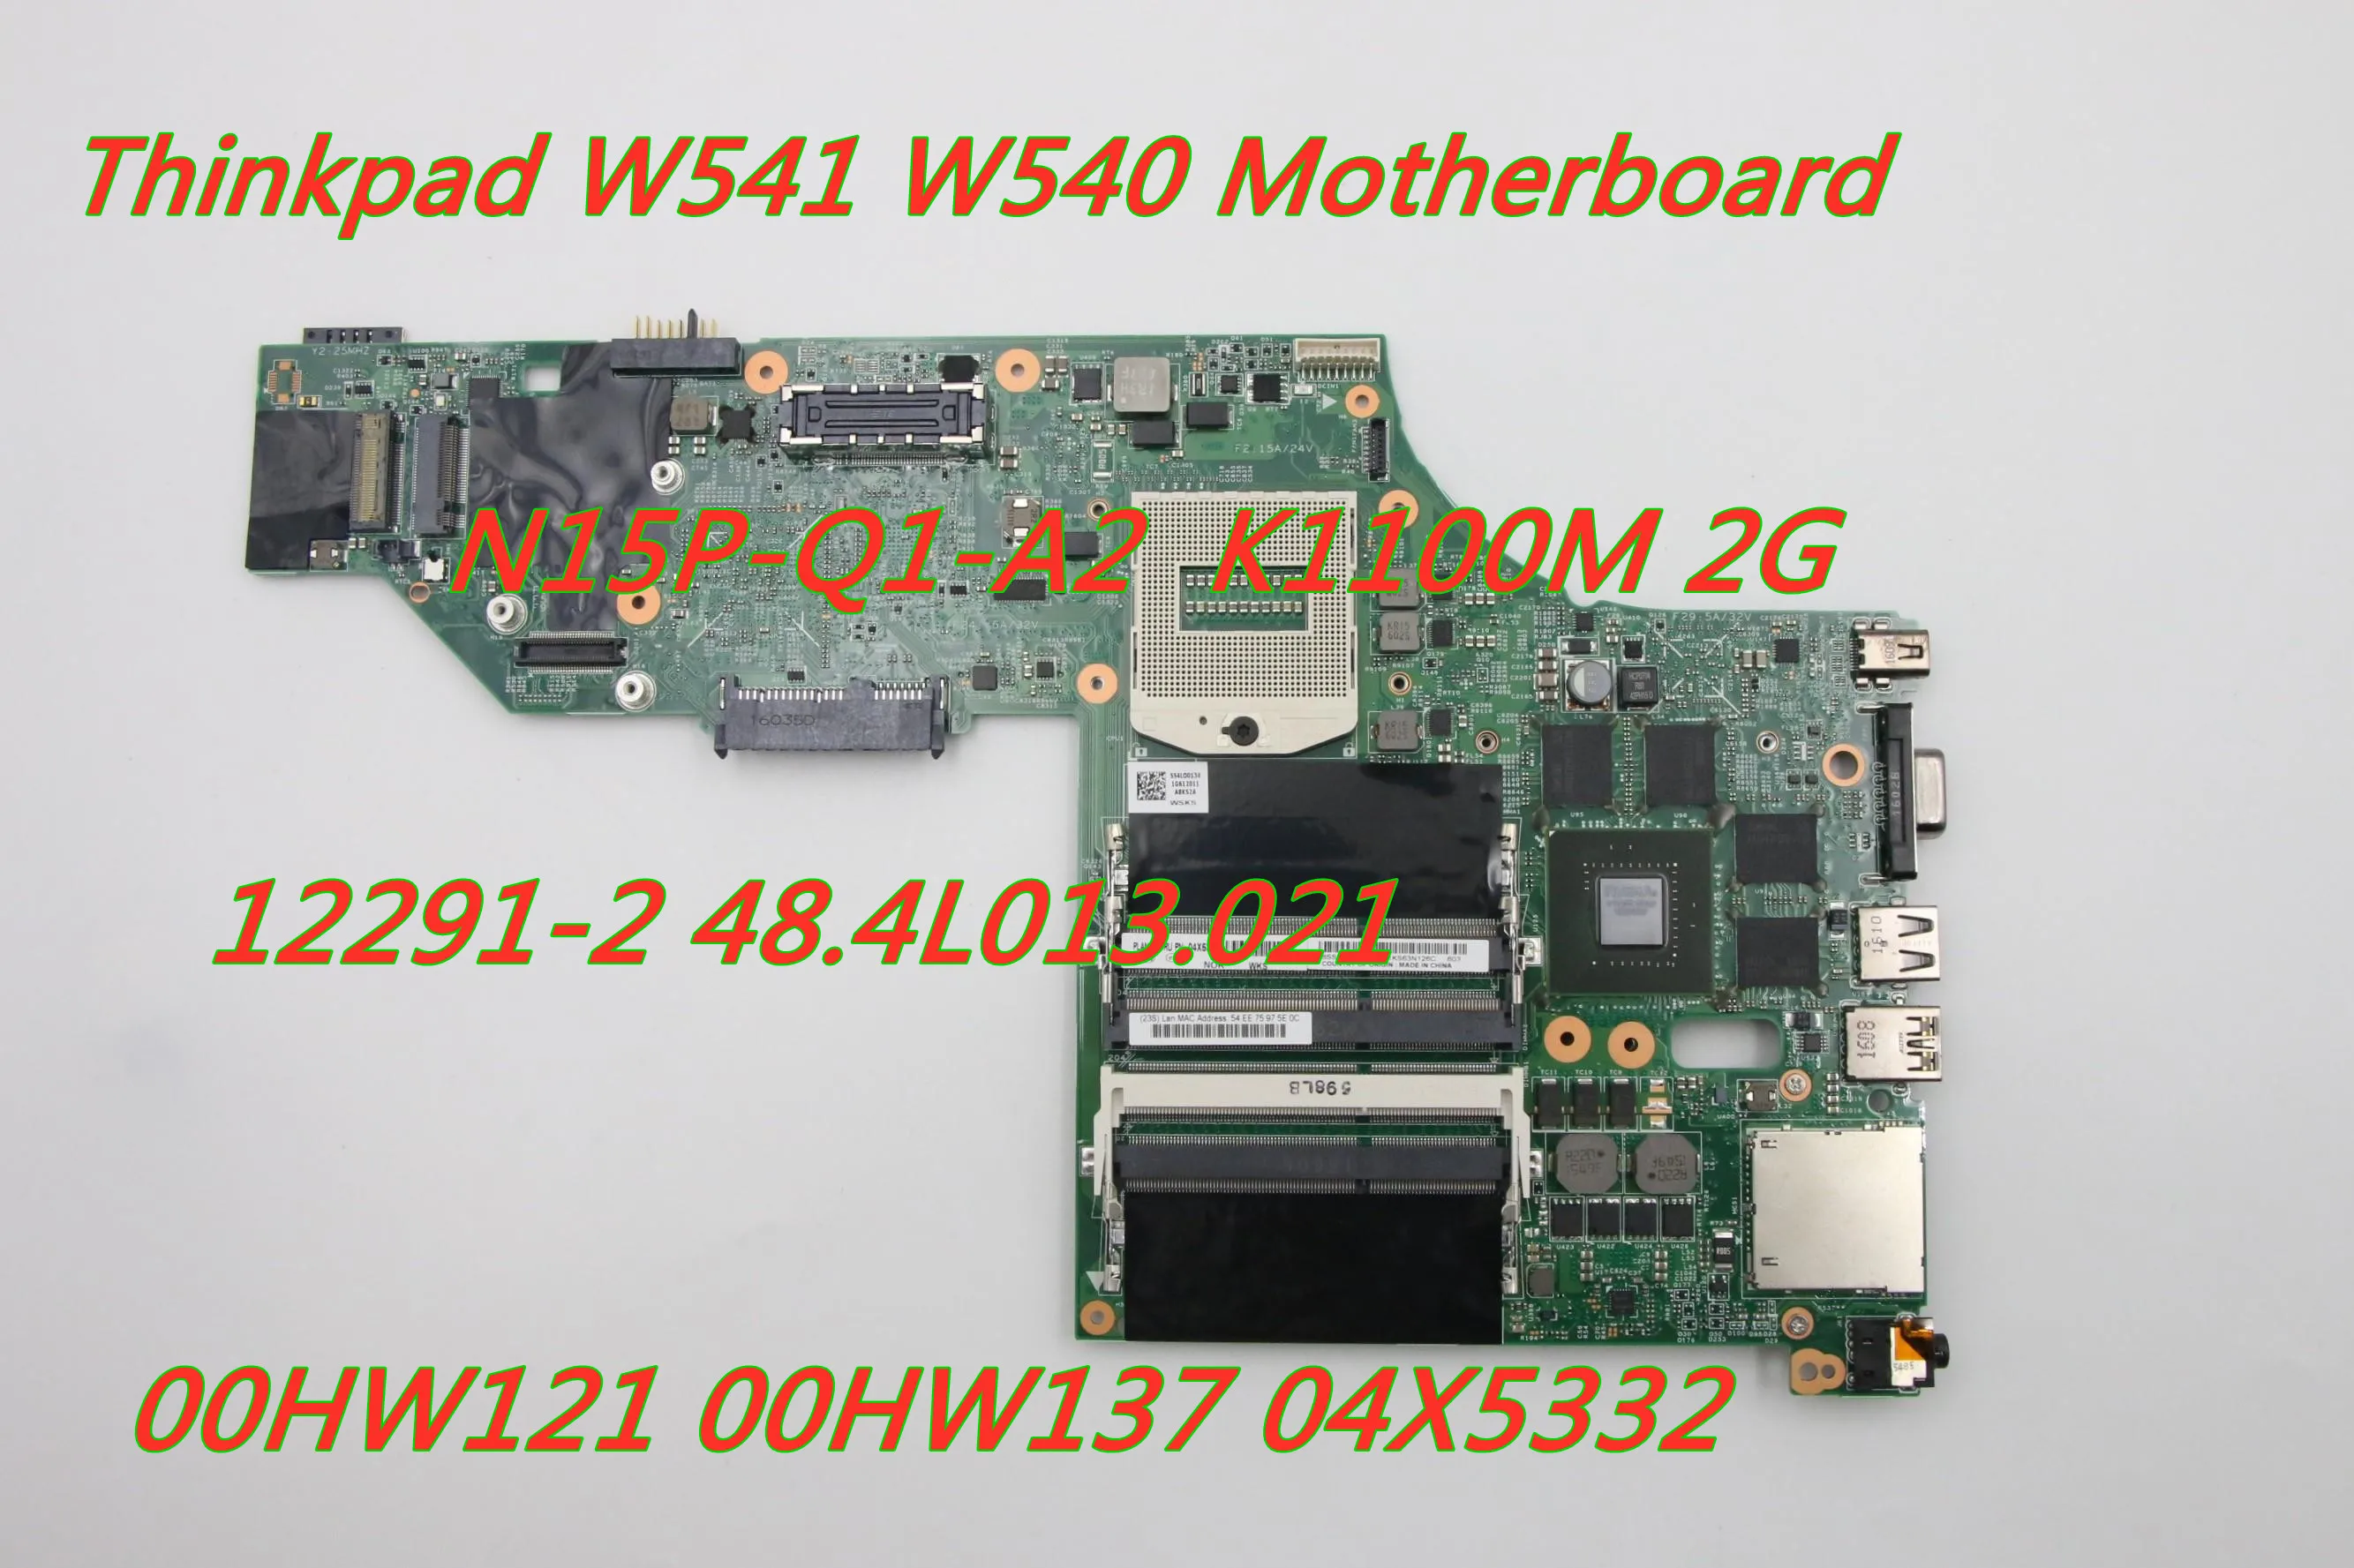 

Материнская плата для ноутбука Lenovo Thinkpad W541 W540 12291-2 48,4l013. 021 GPU:K1100M 2G FRU 00HW121 00HW137 04X5332